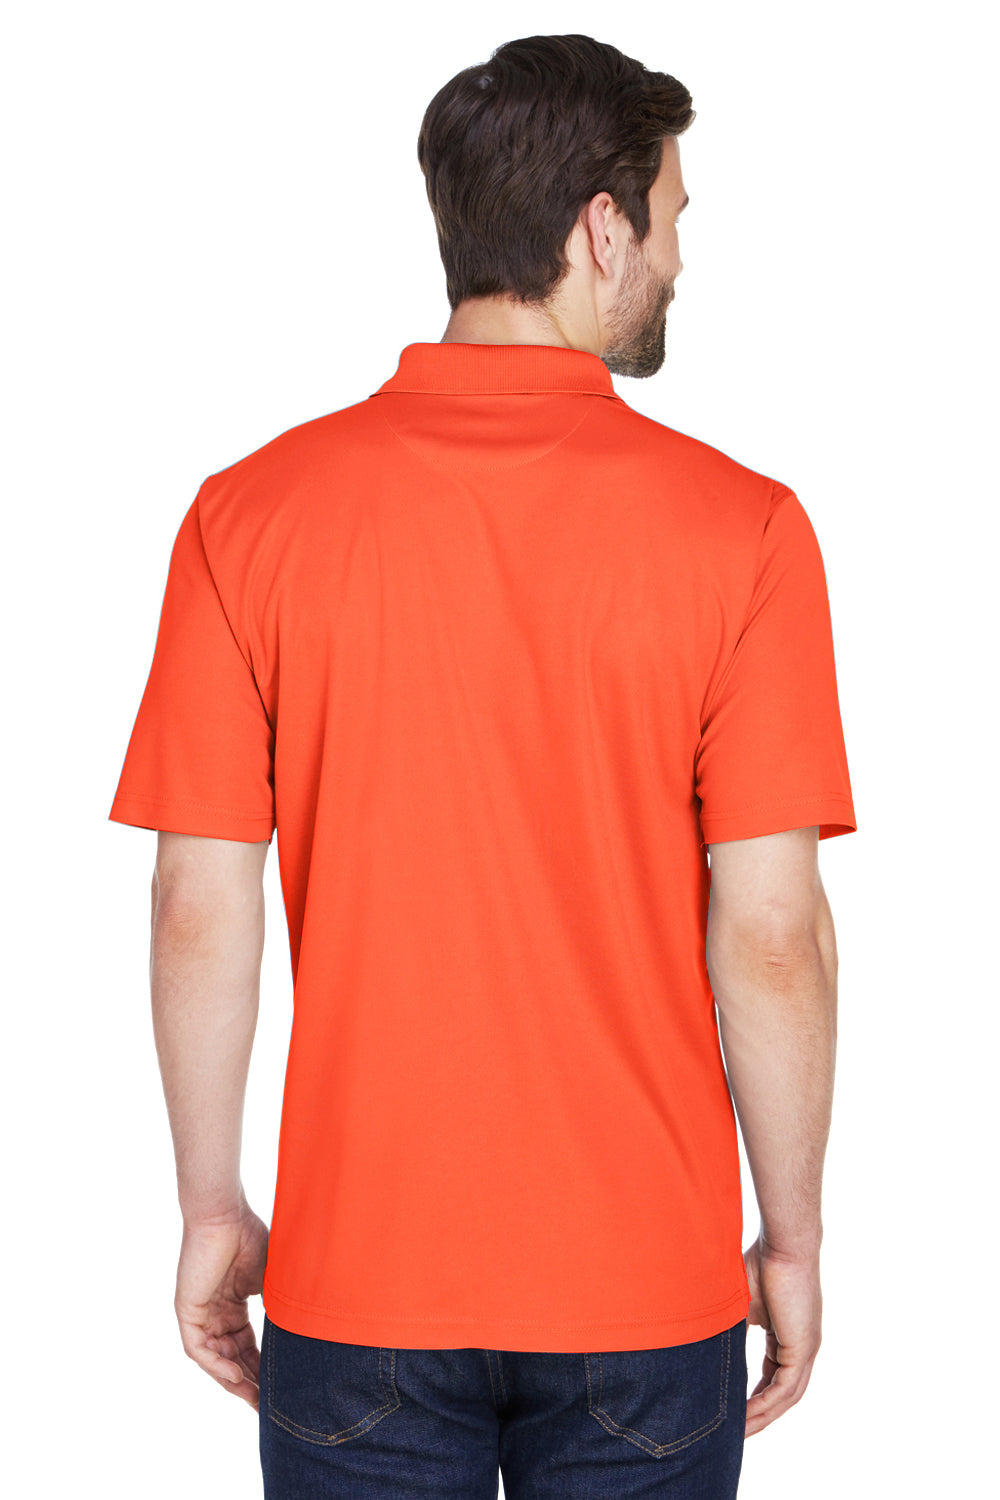 UltraClub 8210 Mens Cool & Dry Moisture Wicking Short Sleeve Polo Shirt Orange Back